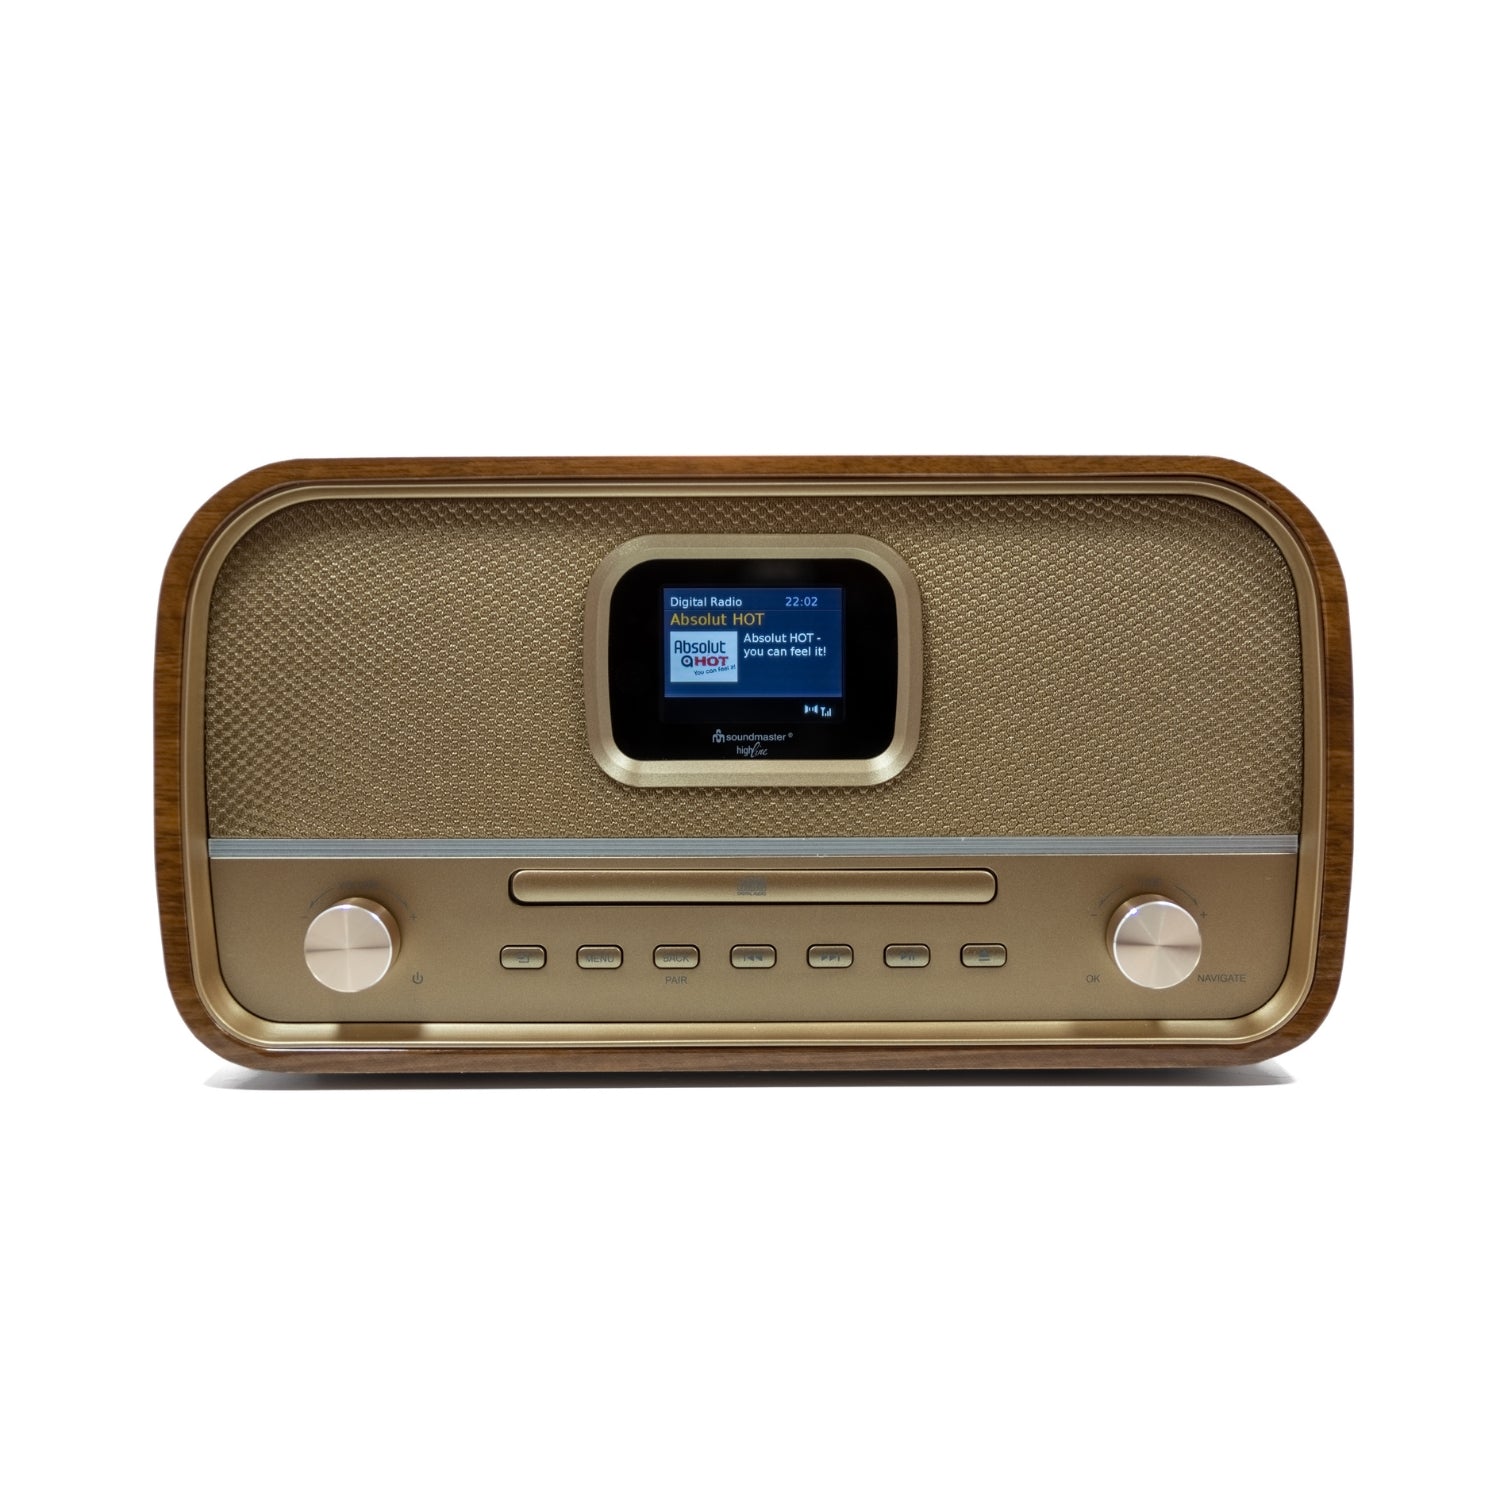 Soundmaster HighLine DAB970BR1 Retro Kompaktanlage Stereo HiFi-Anlage DAB+ UKW CD-Player MP3 USB Bluetooth Streaming Farbdisplay